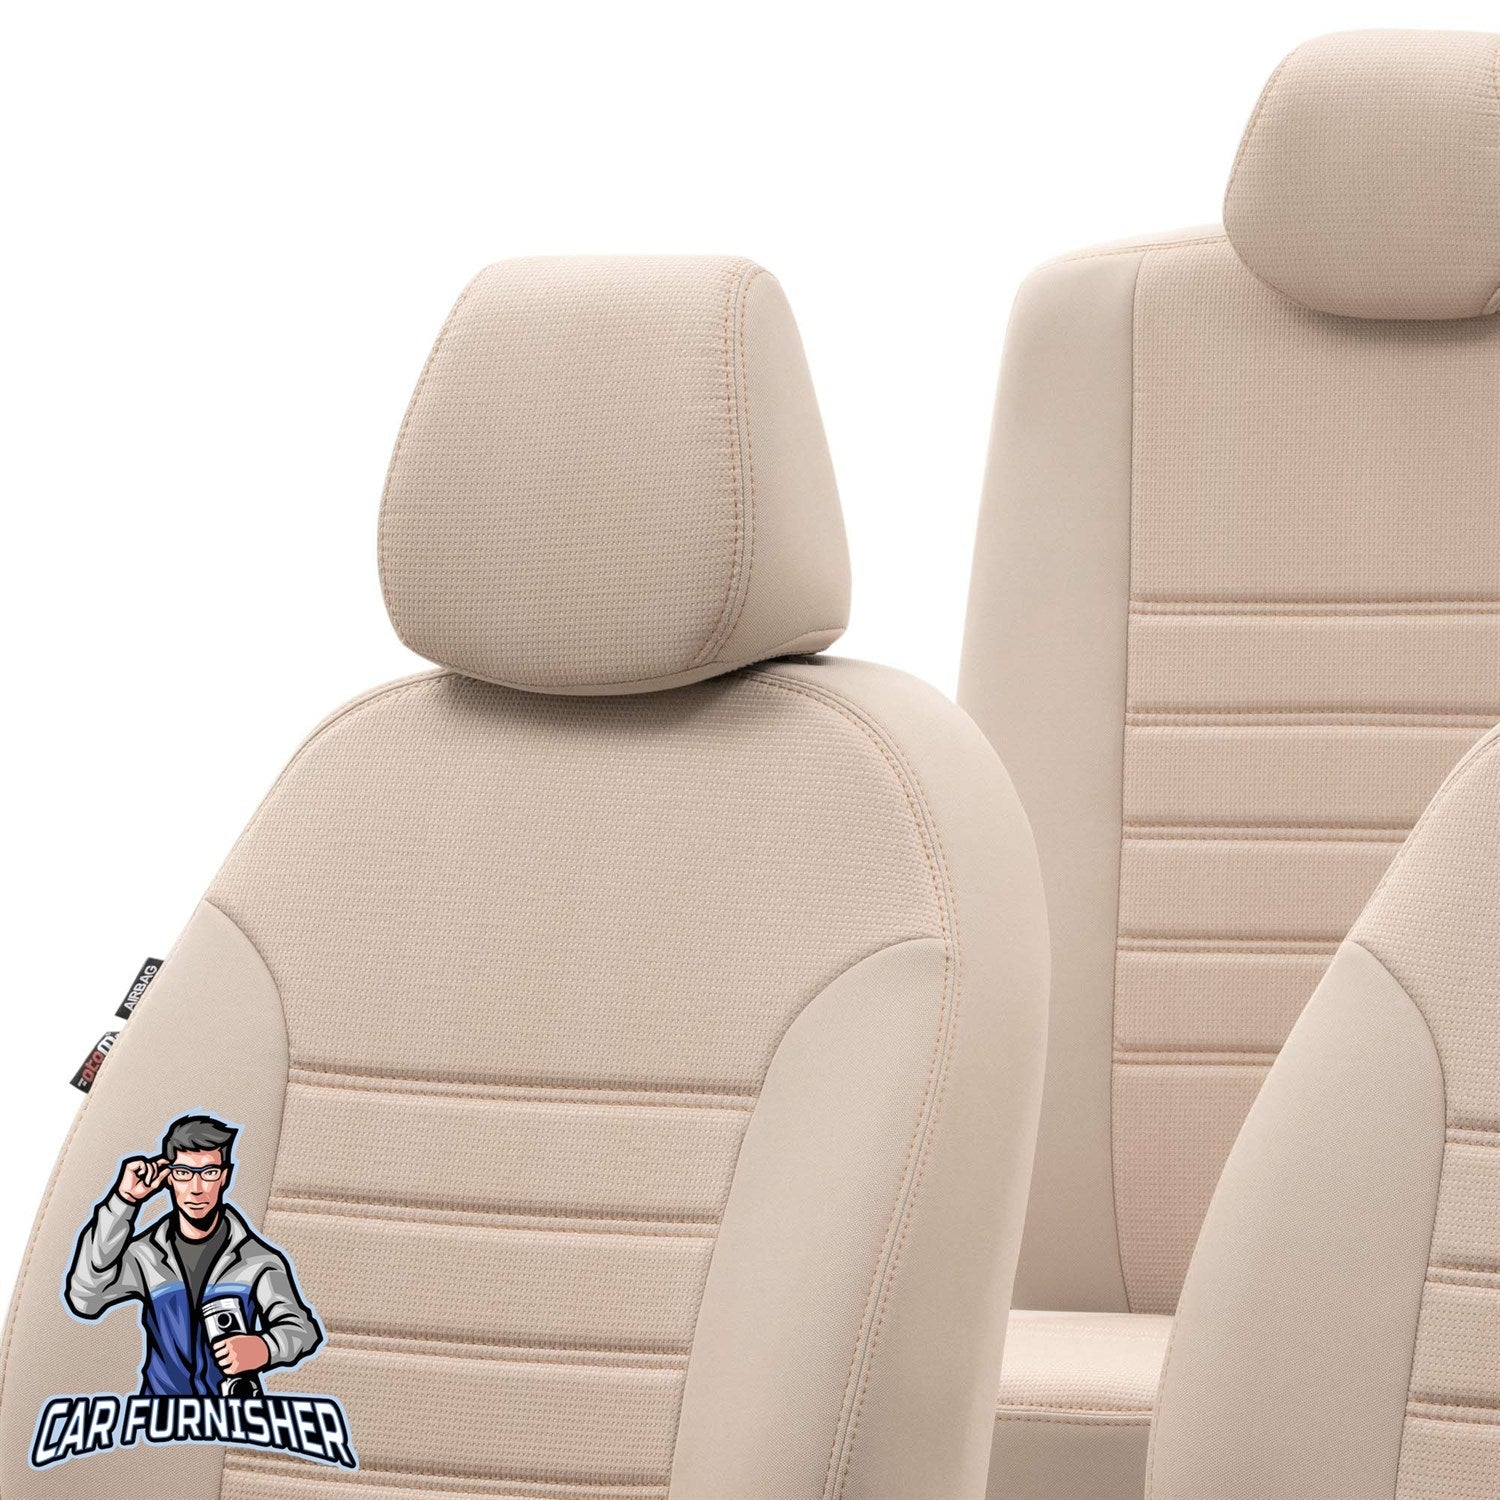 Toyota Yaris Seat Cover Original Jacquard Design Dark Beige Jacquard Fabric